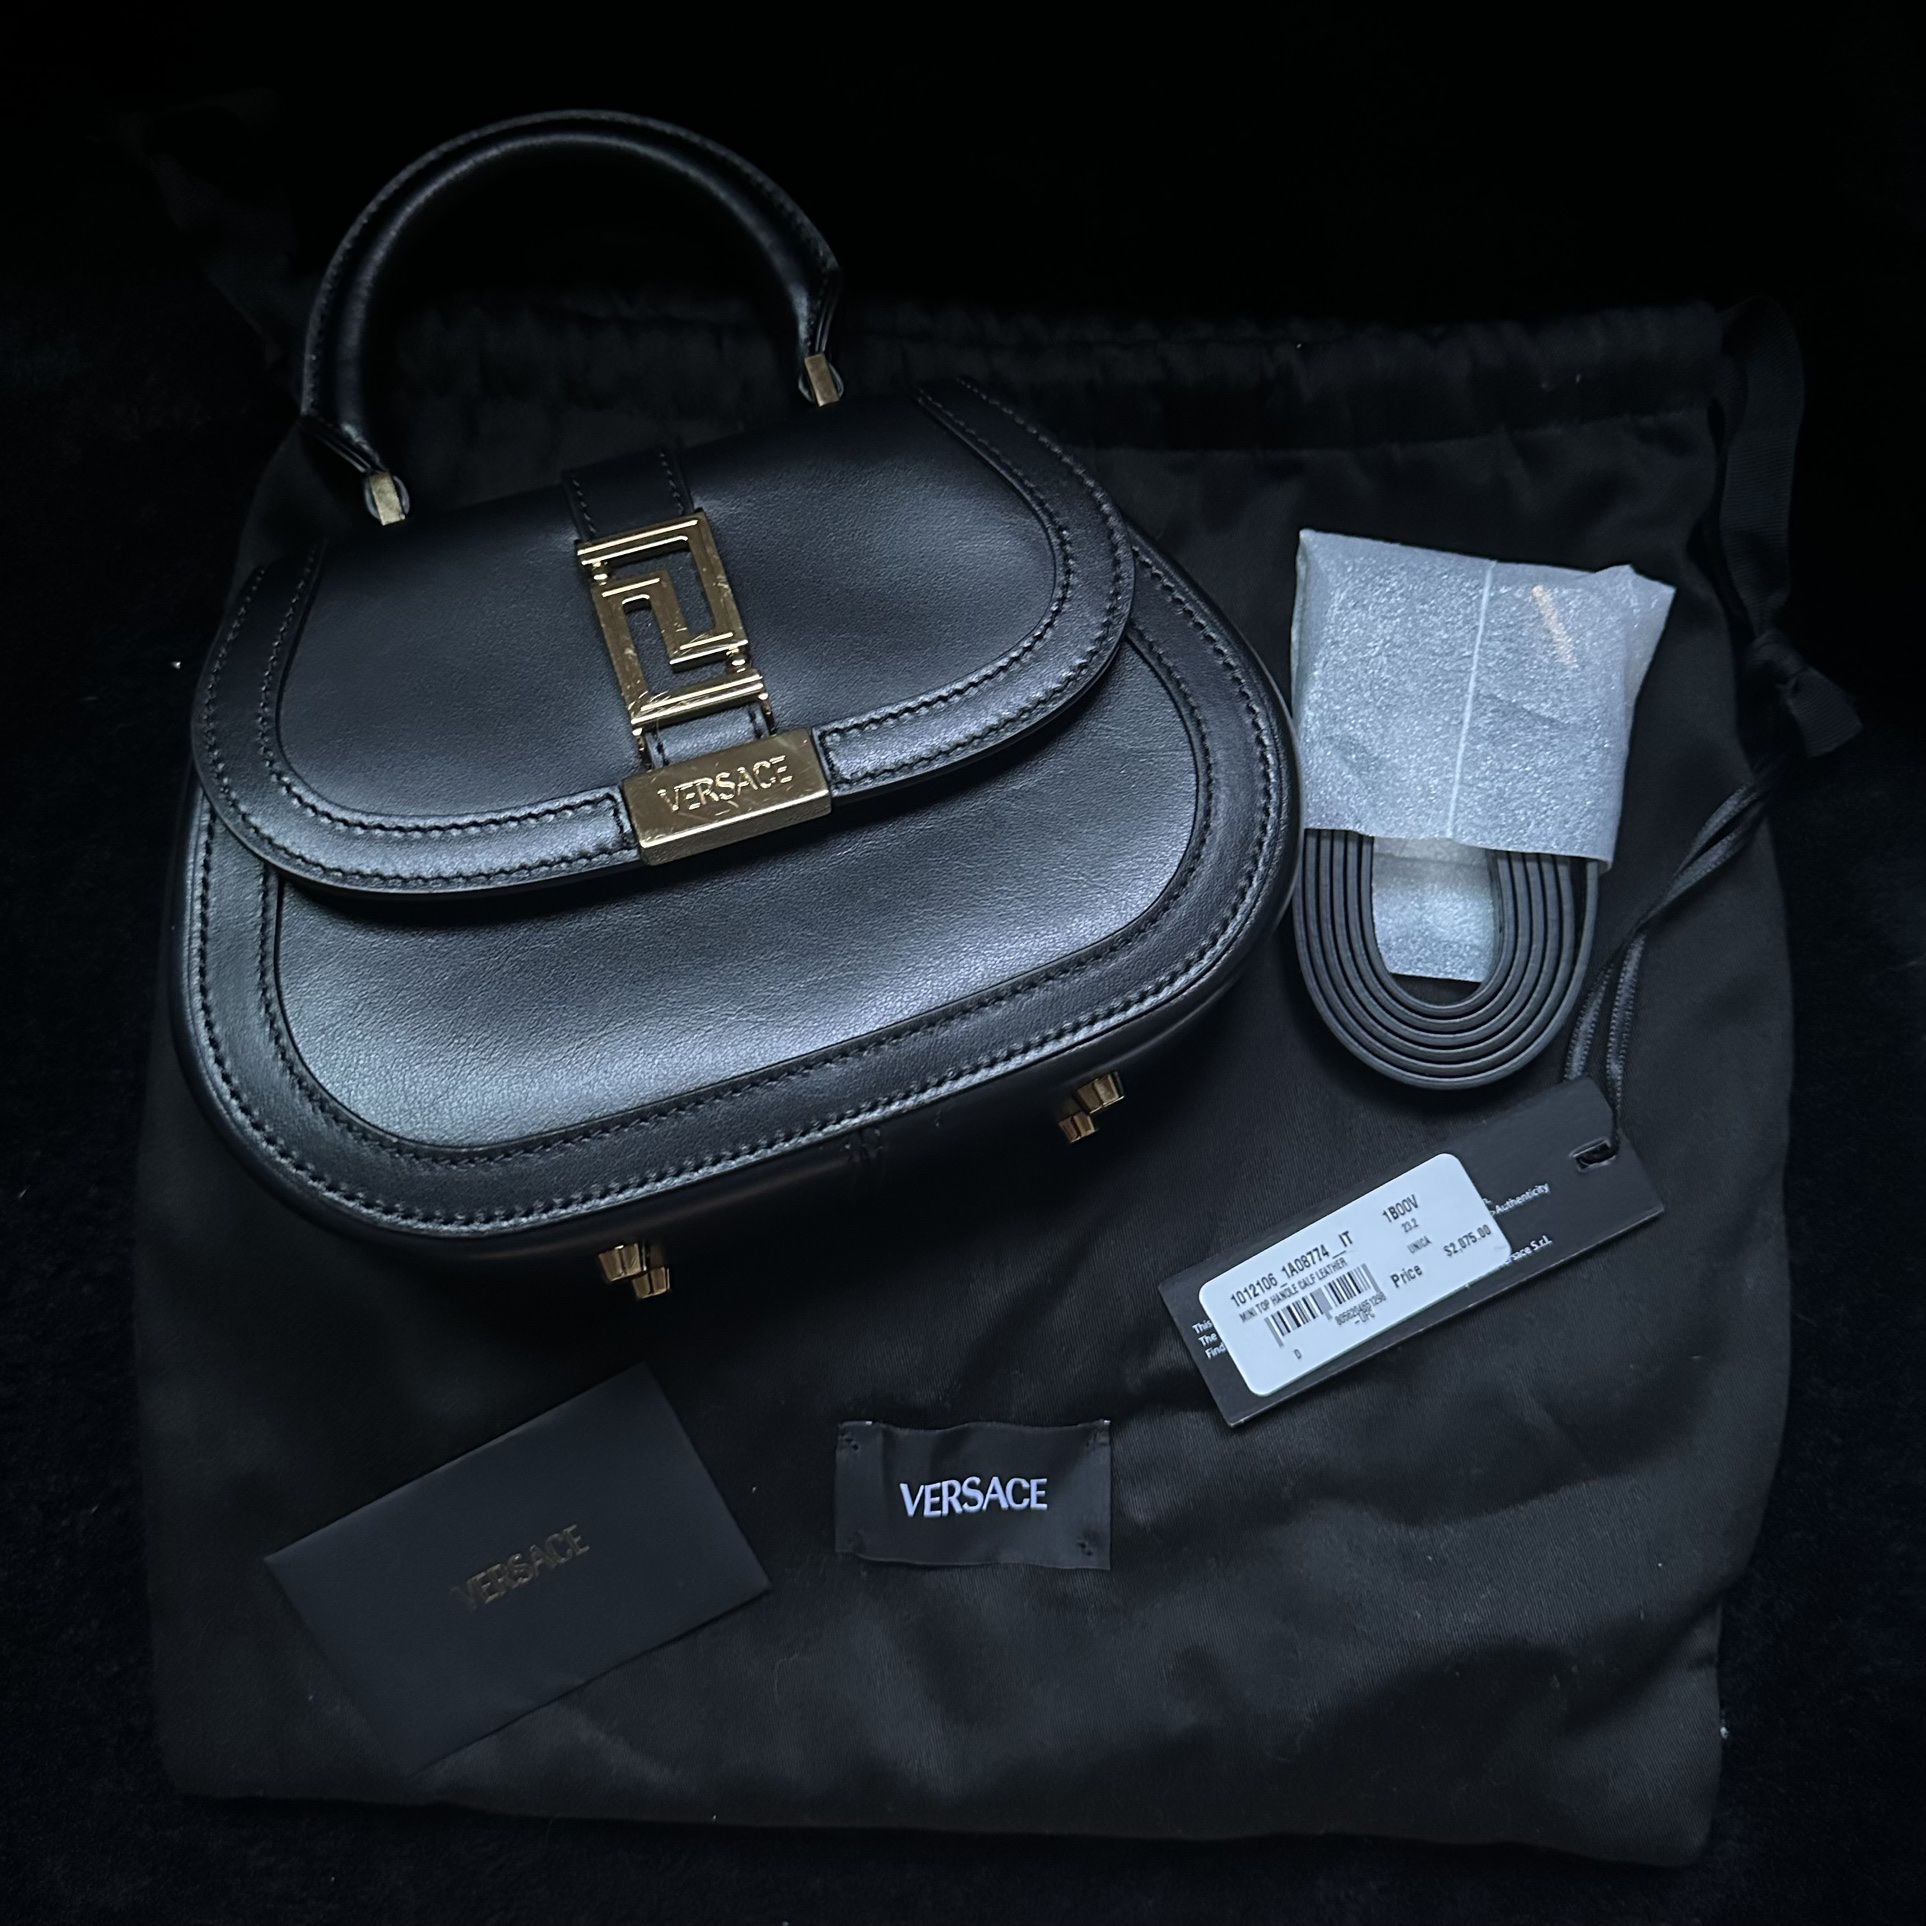 Authentic Versace Handbag